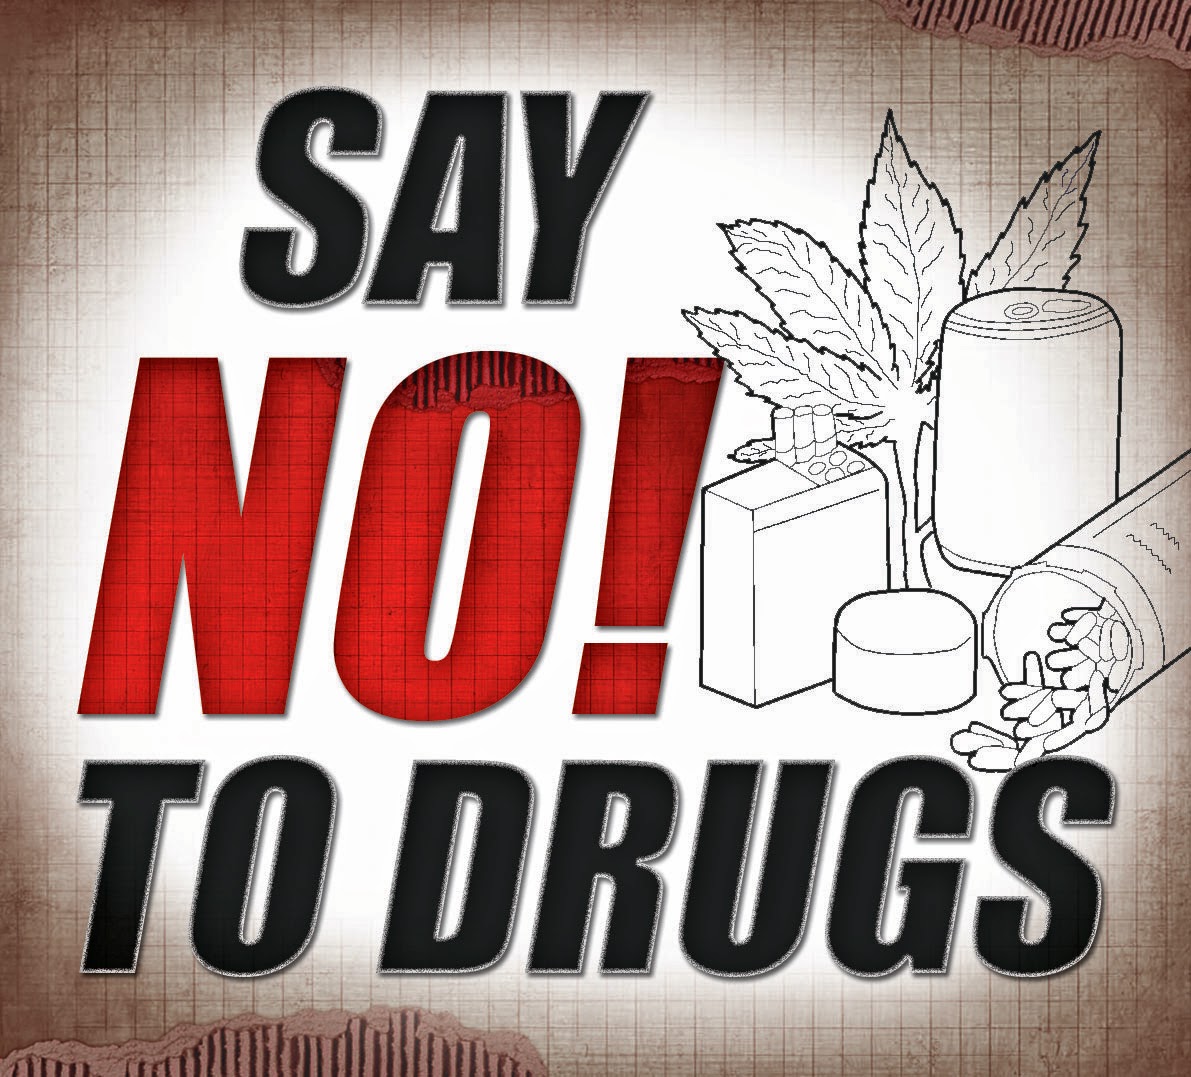 Gambar Ilustrasi Anti Narkoba Iluszi